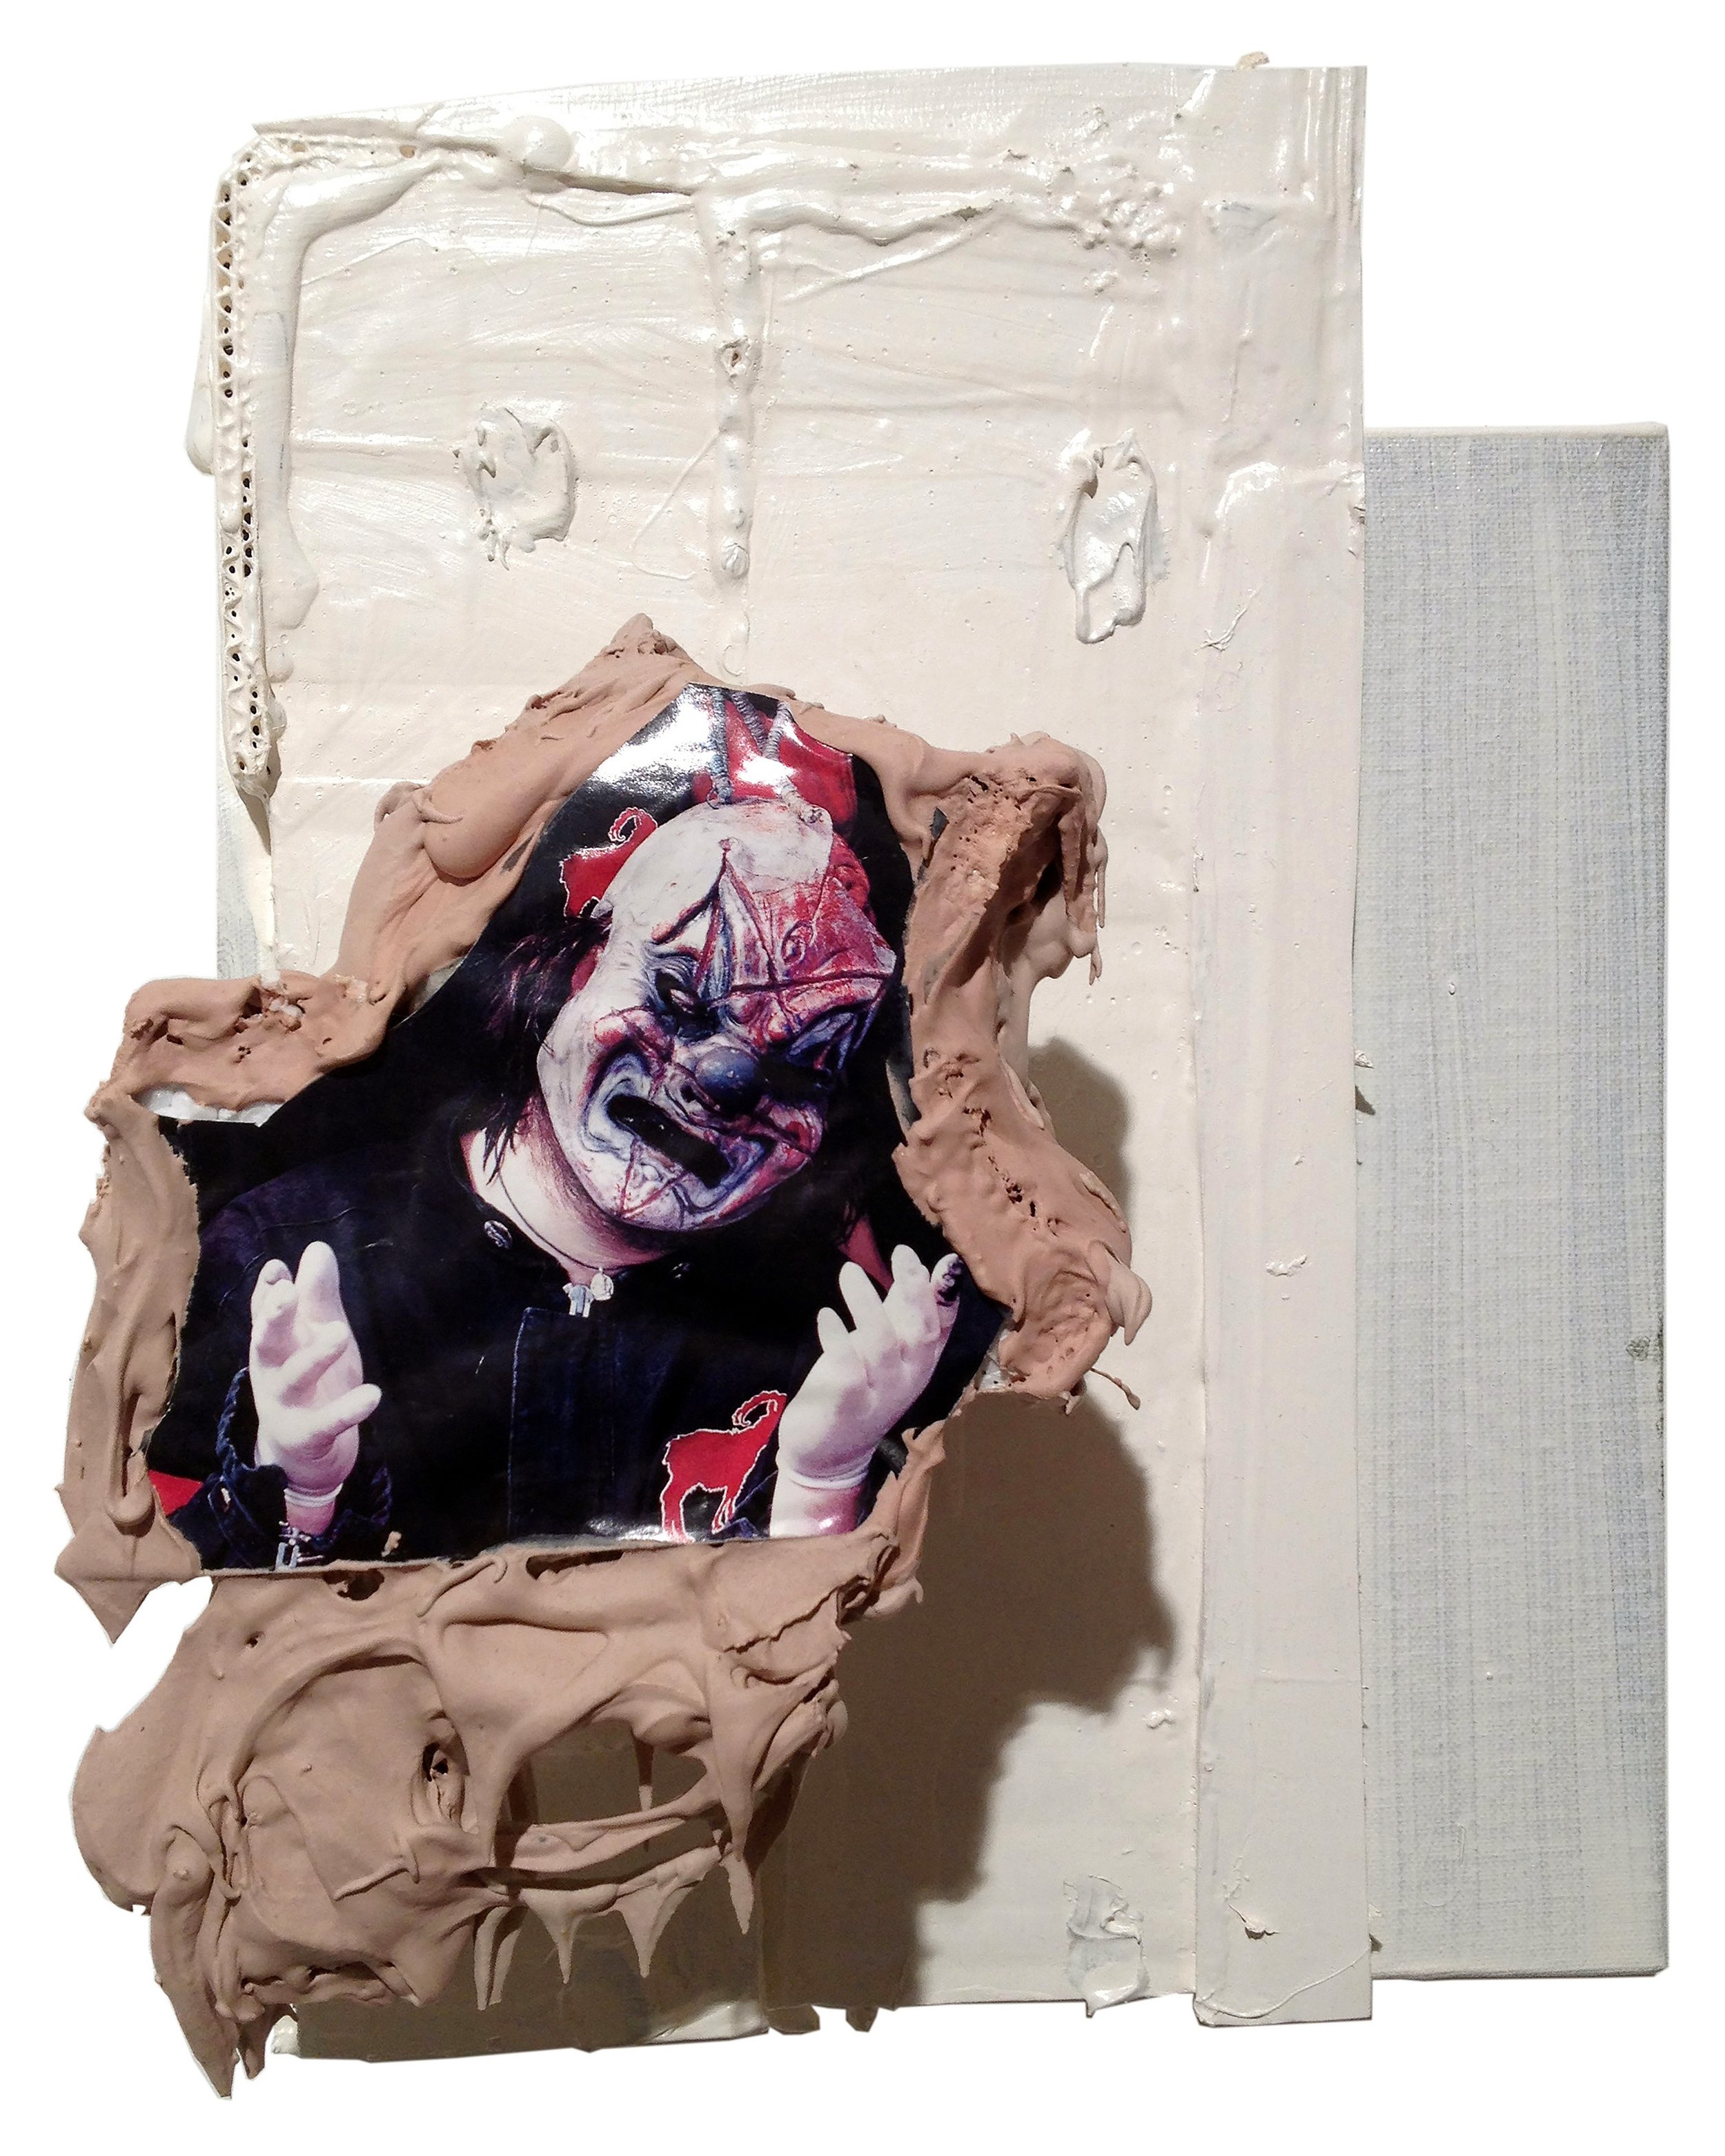  Drew Beattie  Misery   2009 acrylic, bondo and collage on canvas 17 x 12 inches 